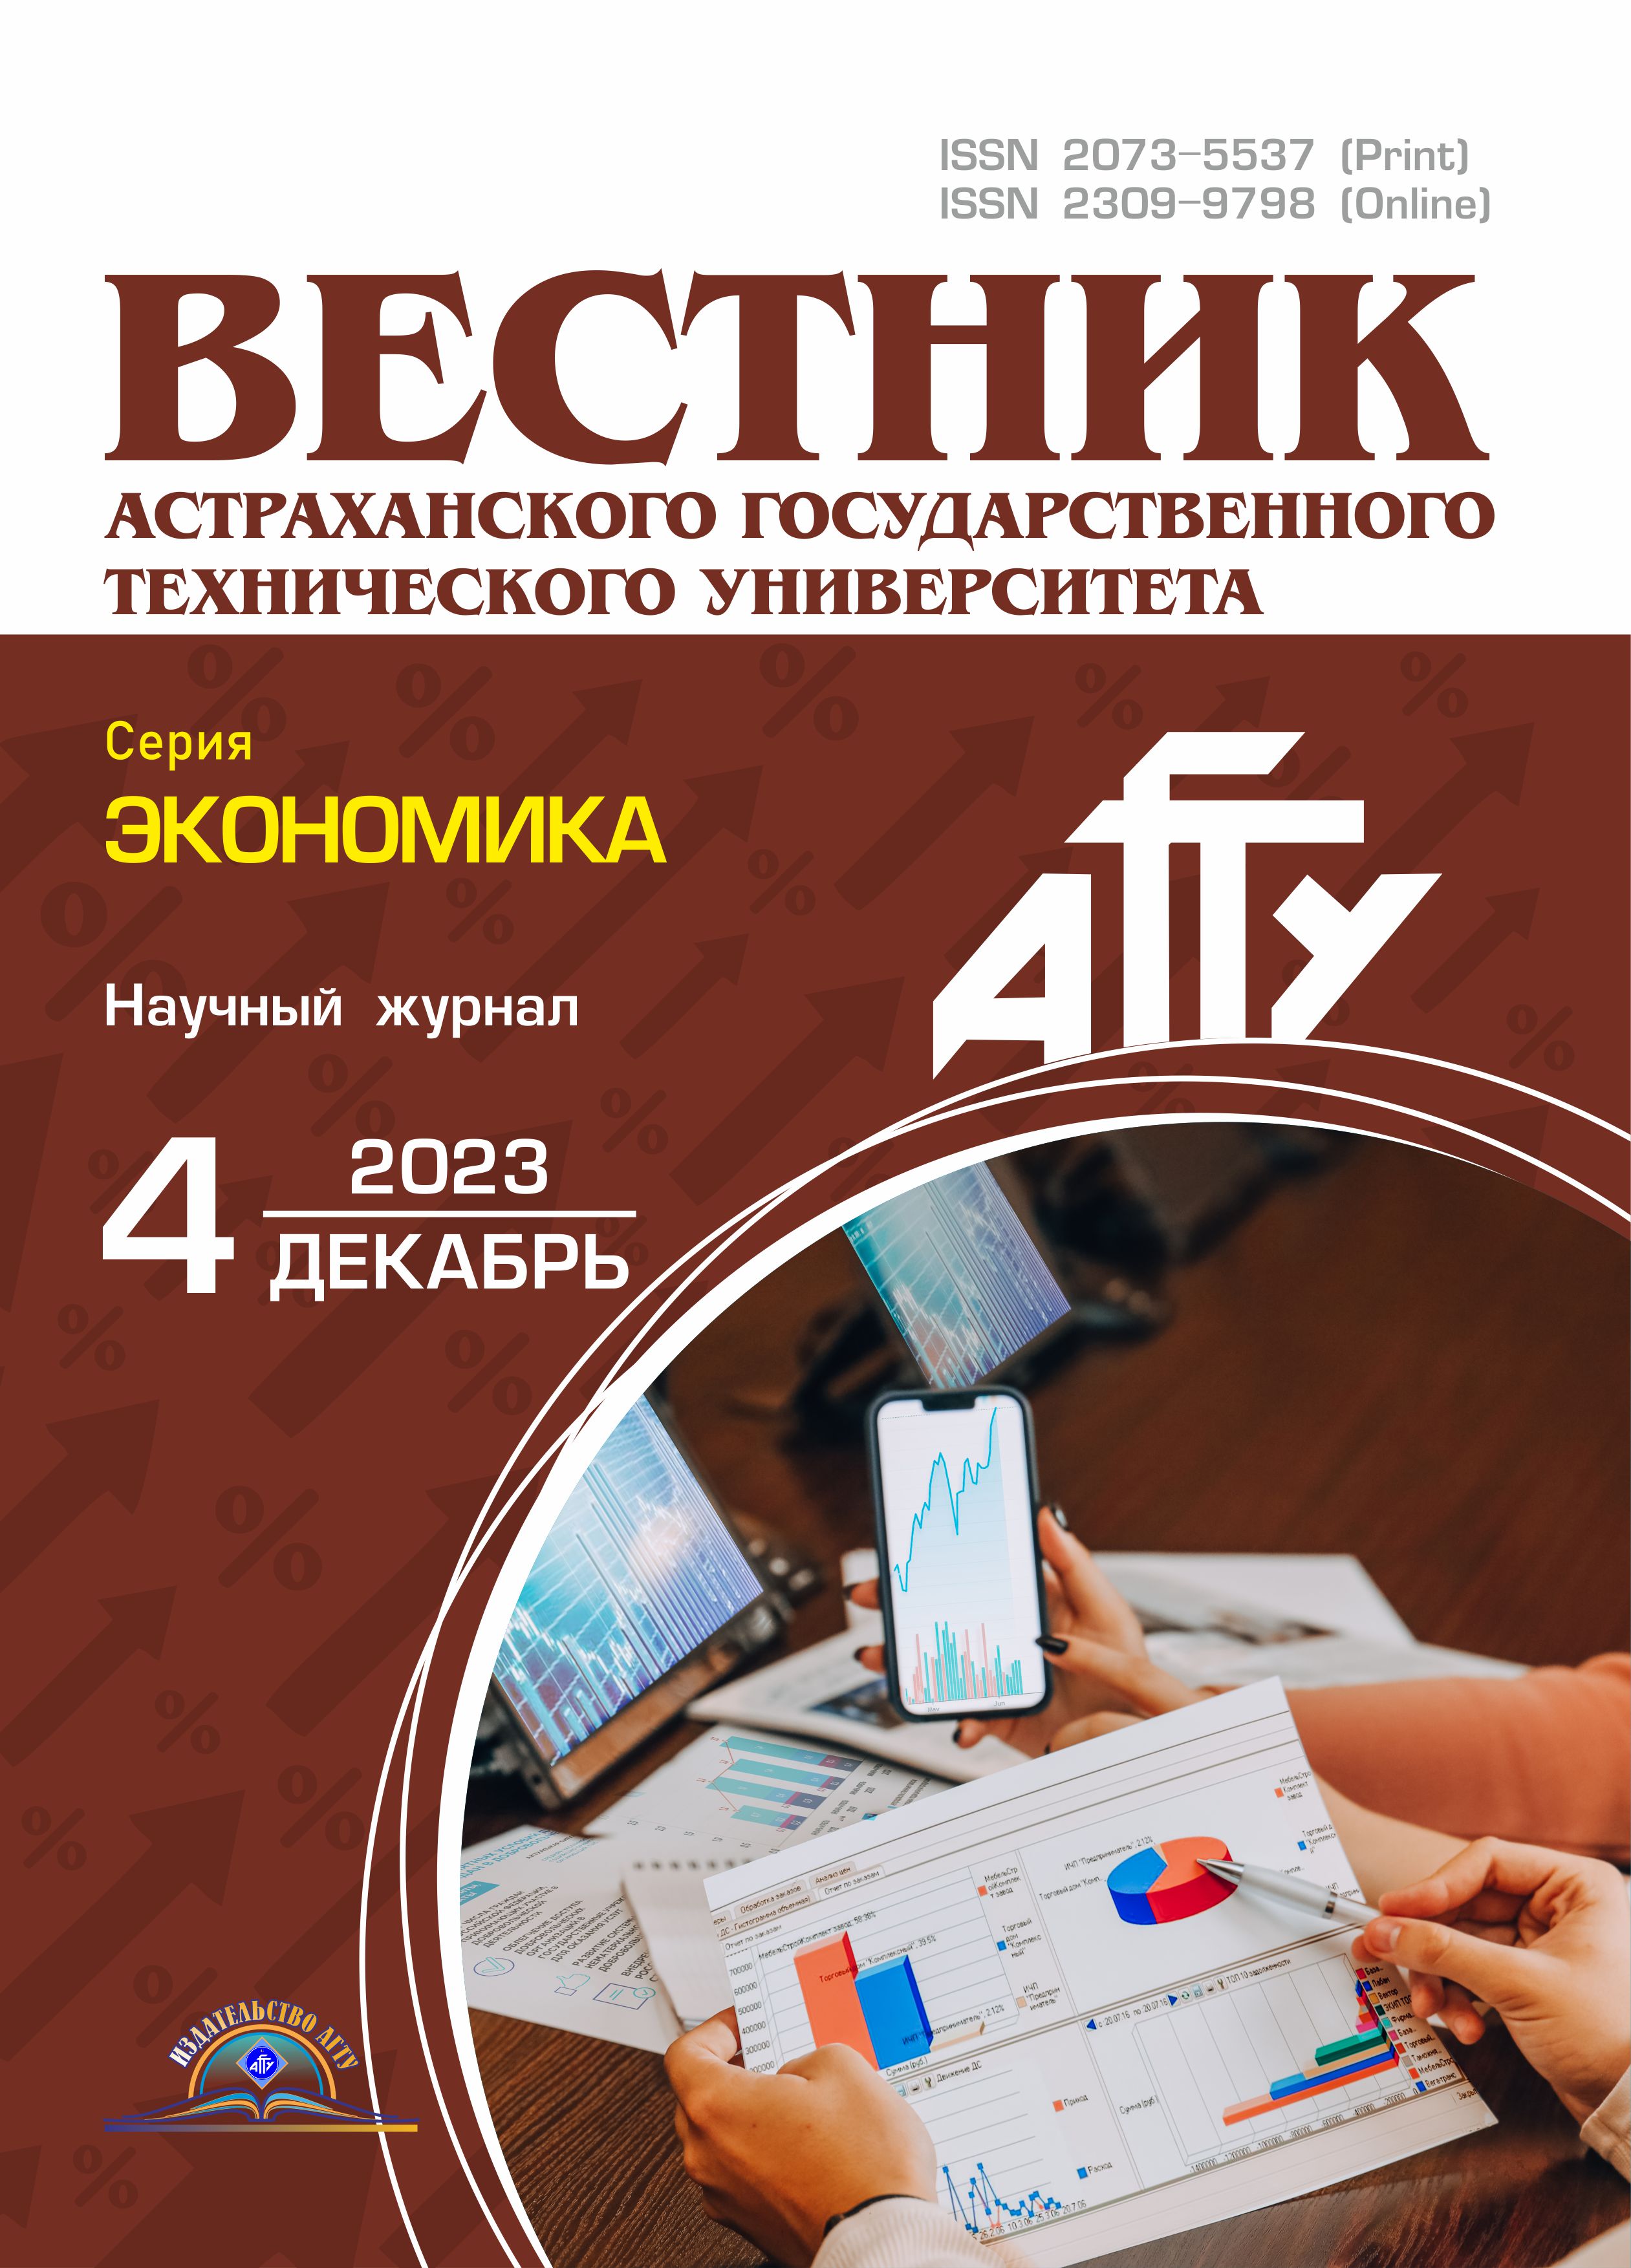                         Vestnik of Astrakhan State Technical University. Series: Economics
            